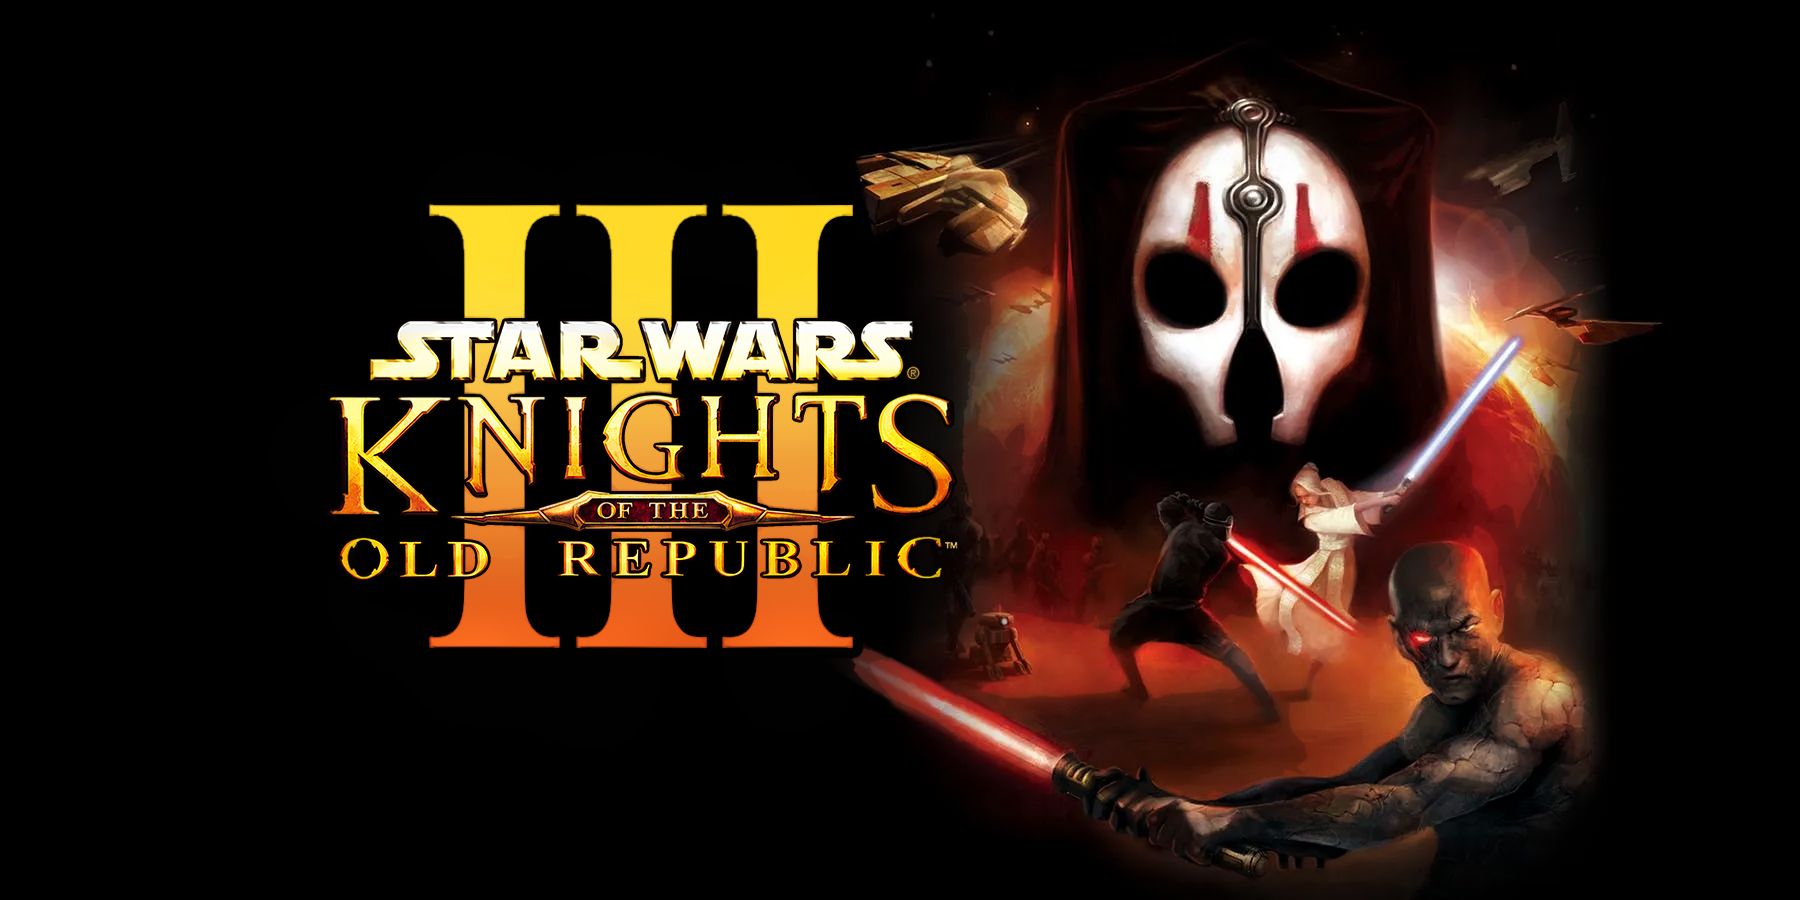 Star Wars Knights of the Old Republic KOTOR 3 mockup